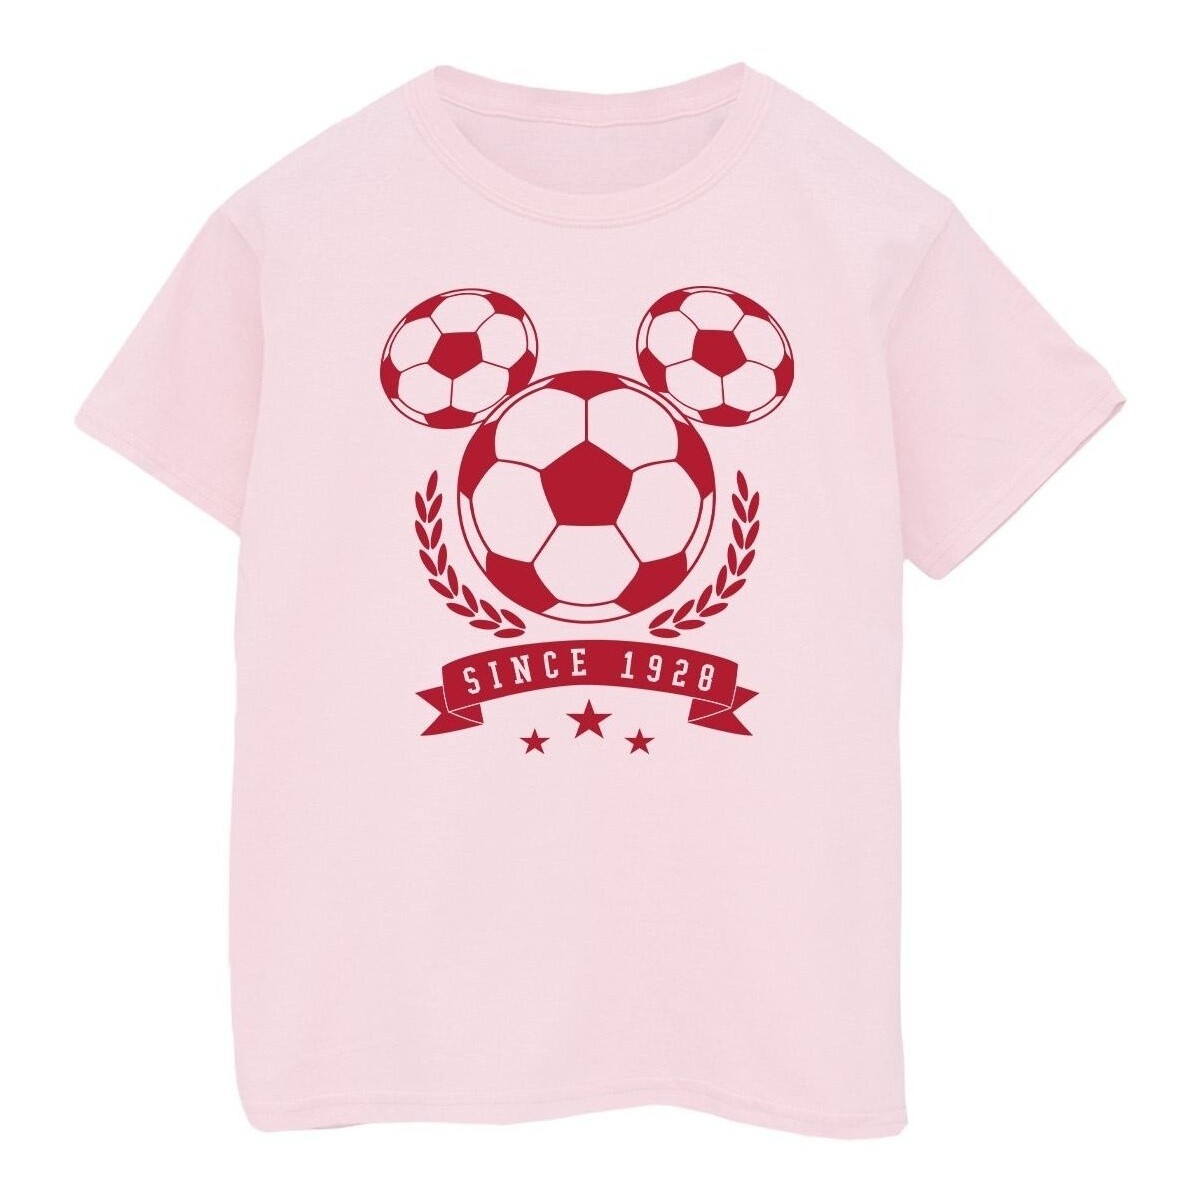 textil Niña Camisetas manga larga Disney Mickey Football Head Rojo